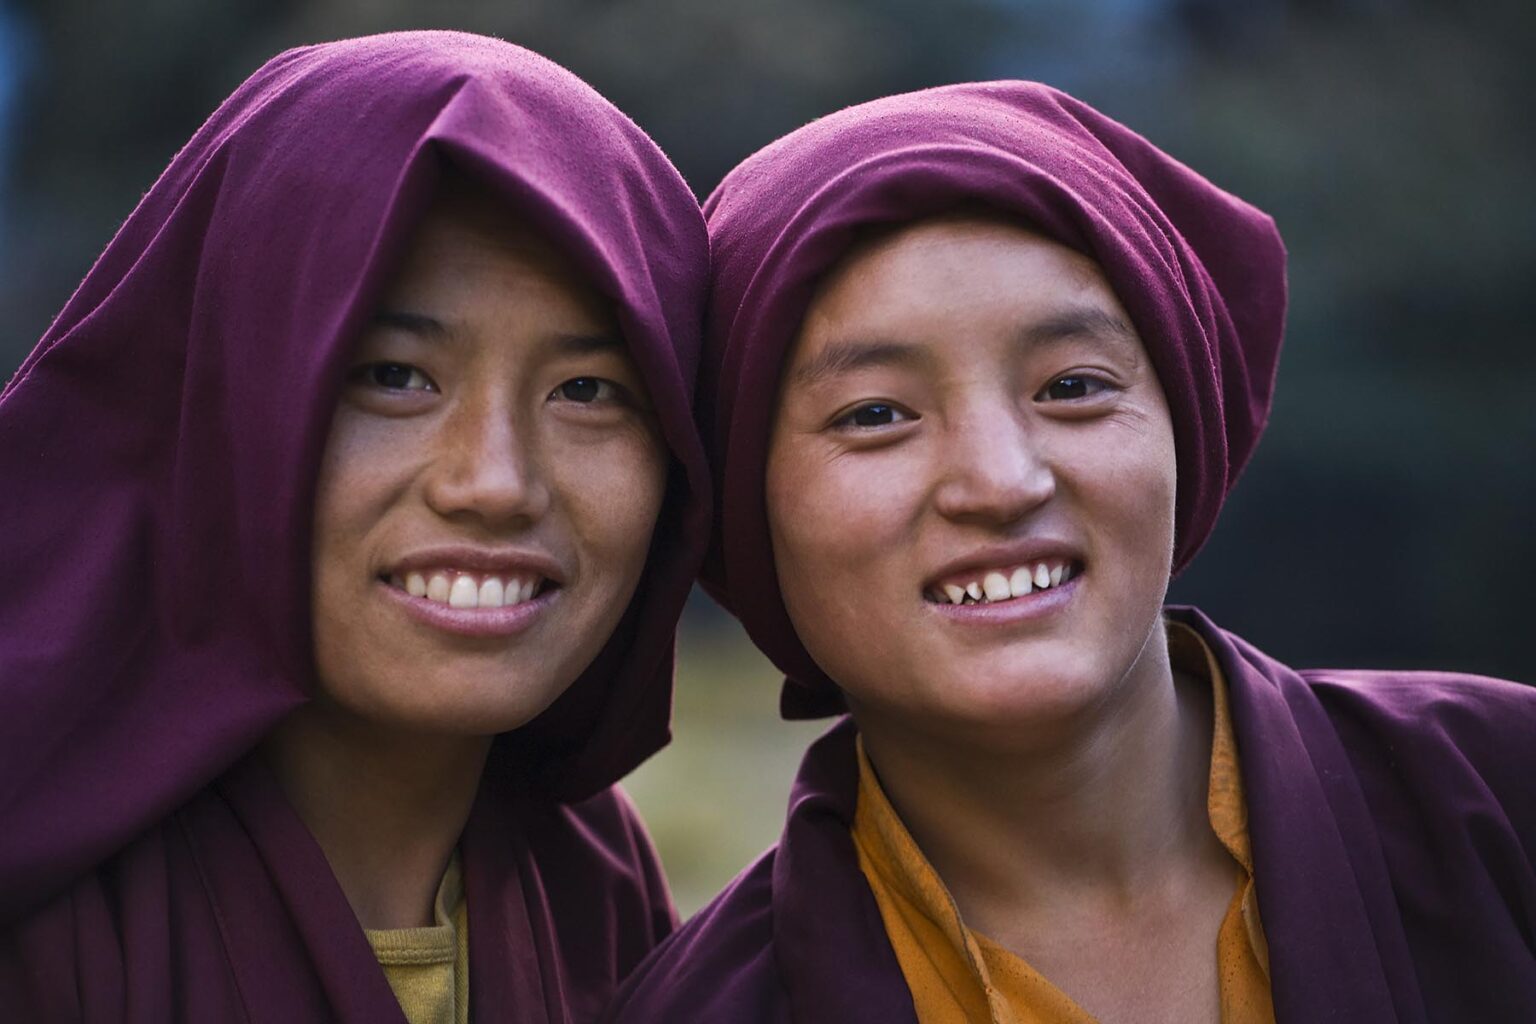 Smiling NUNS at a remote TIBETAN BUDDHIST MONASTERY - NEPAL HIMALAYA